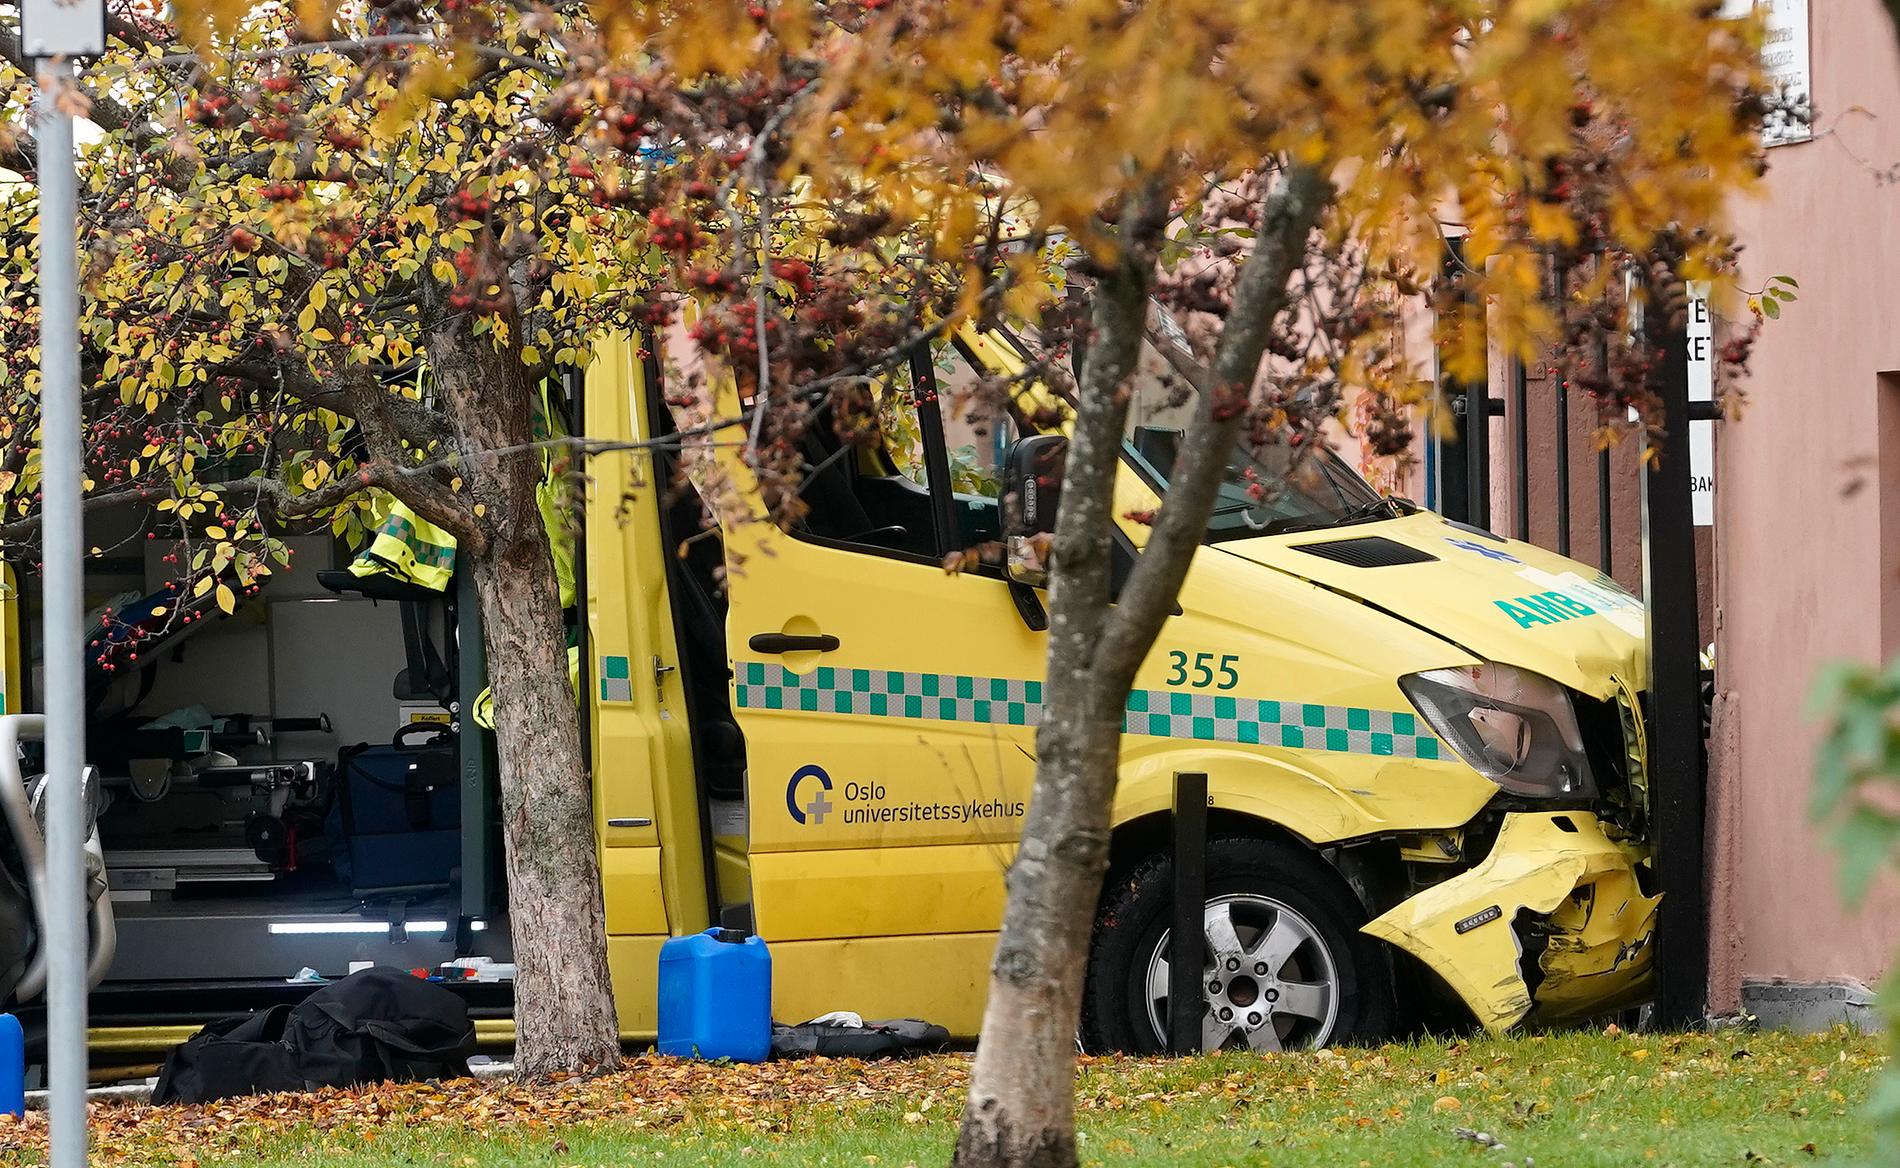 Flera personer har blivit påkörda av en stulen ambulans i området Torshov, Oslo, uppger polisen